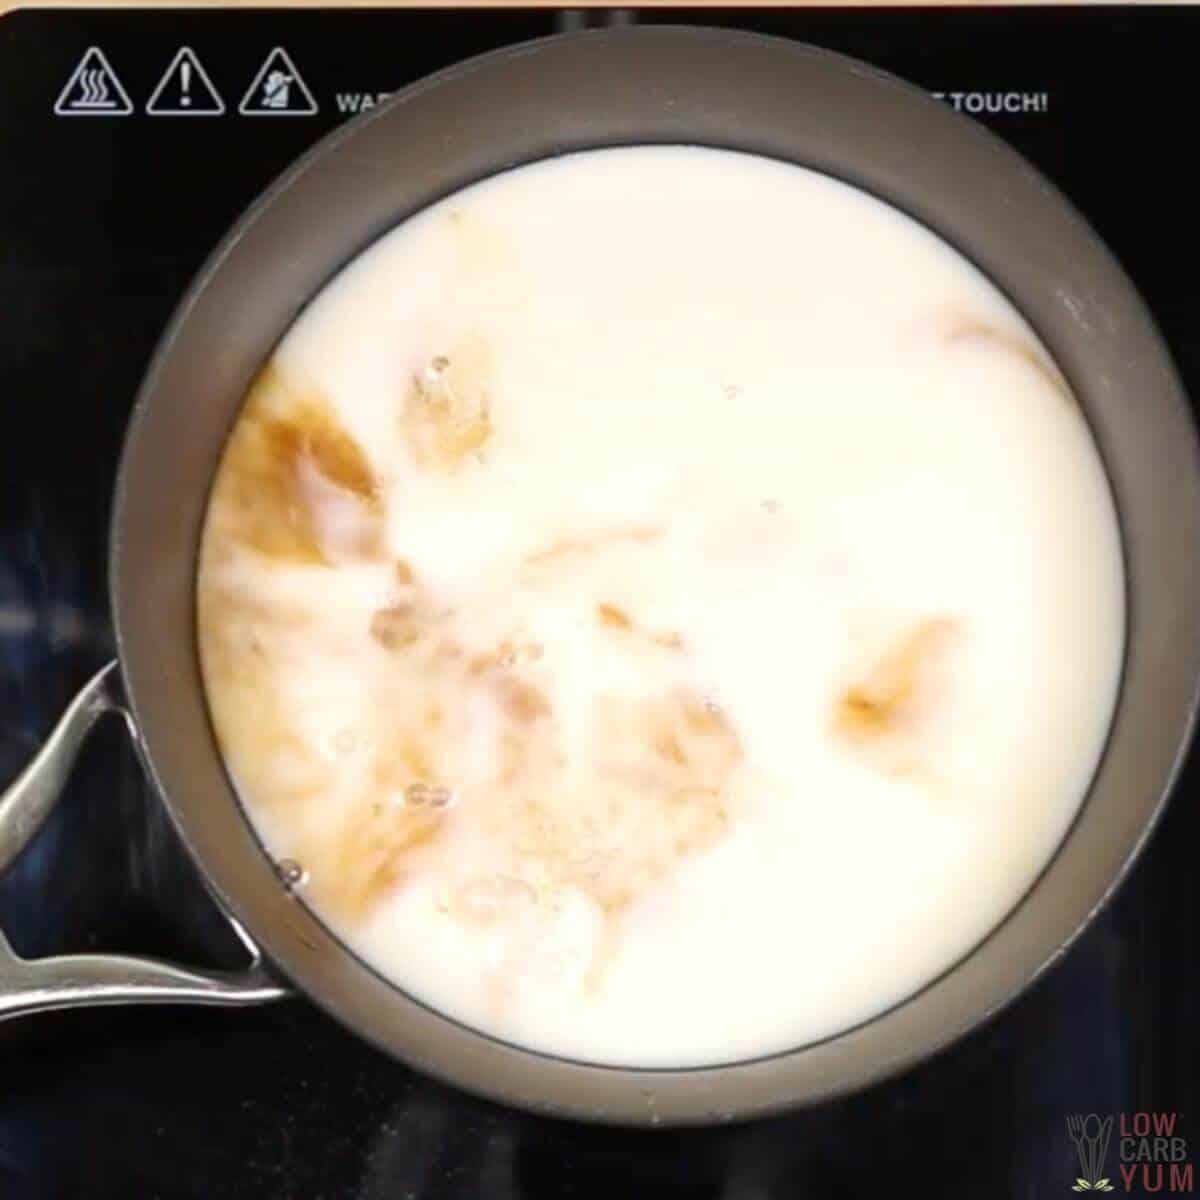 heating almond milk mixture